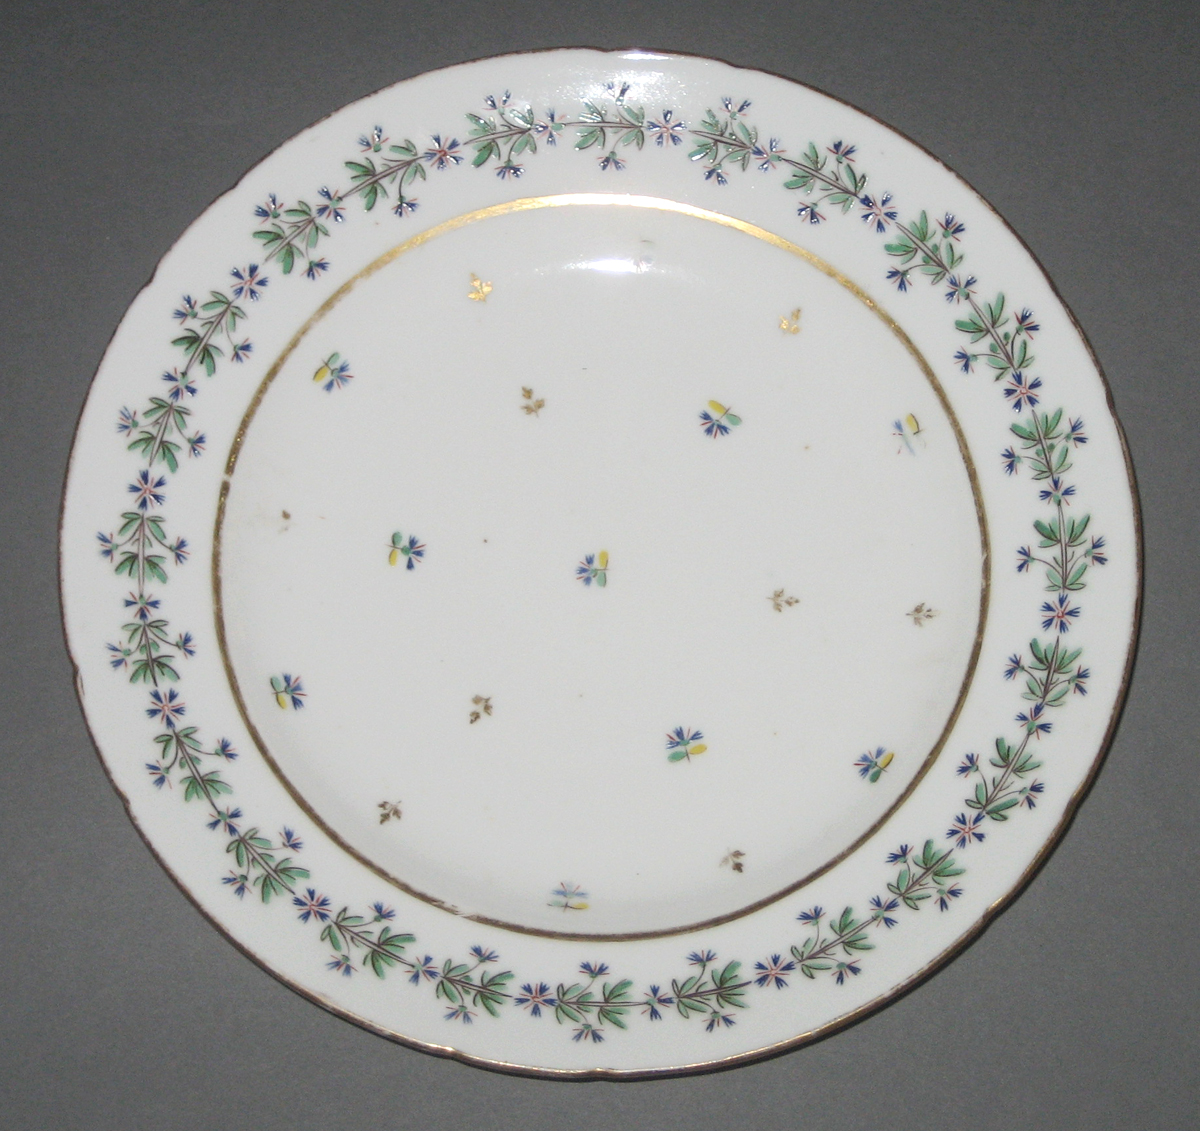 2014.0041 Porcelain plate